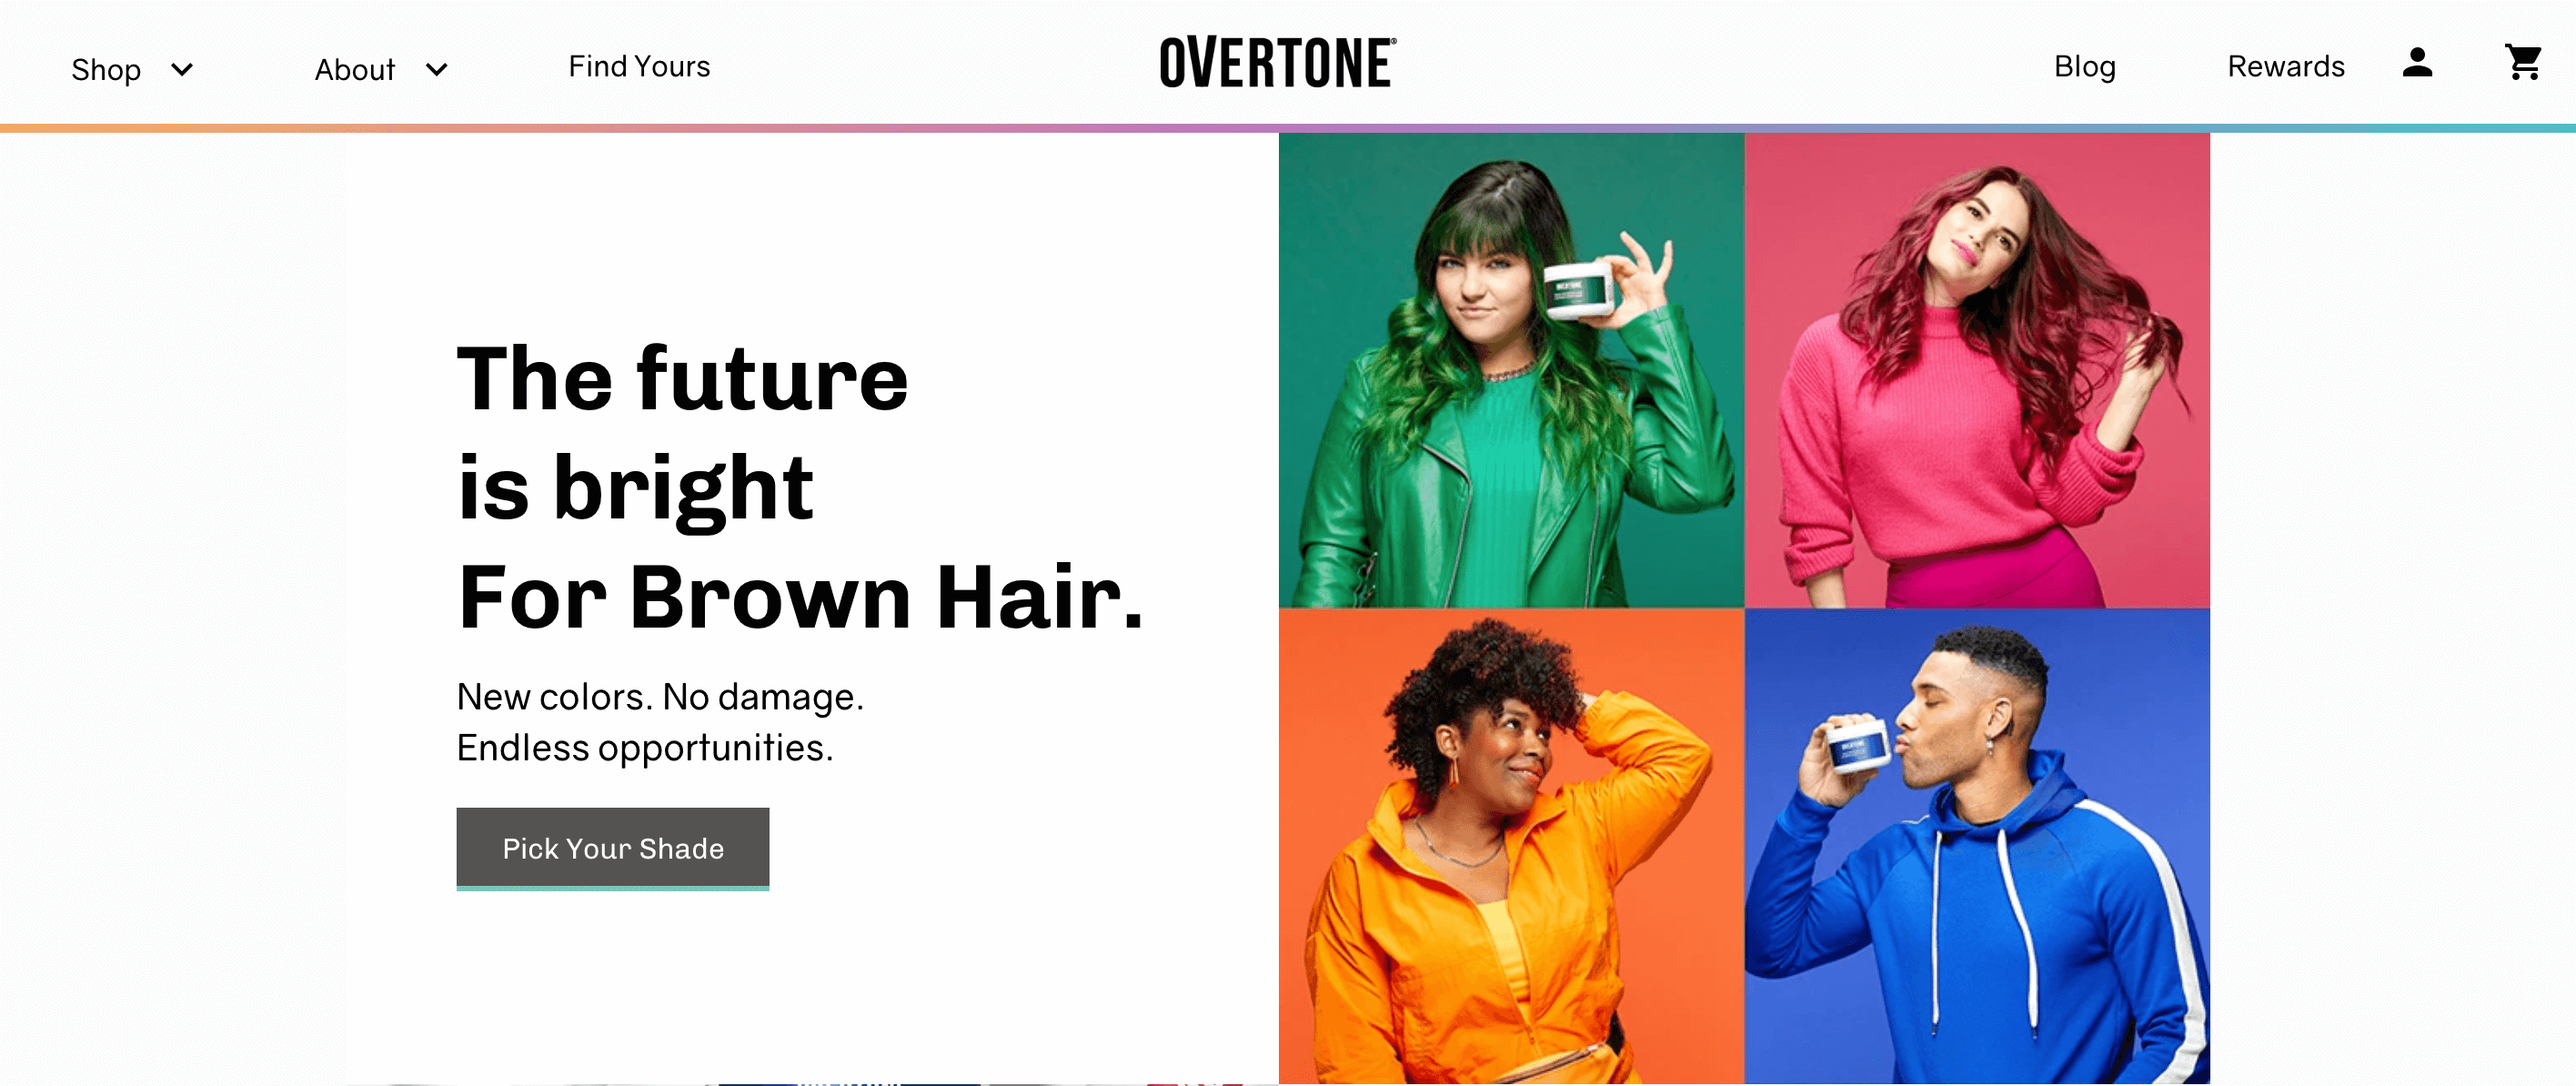 Overtone homepage 2020